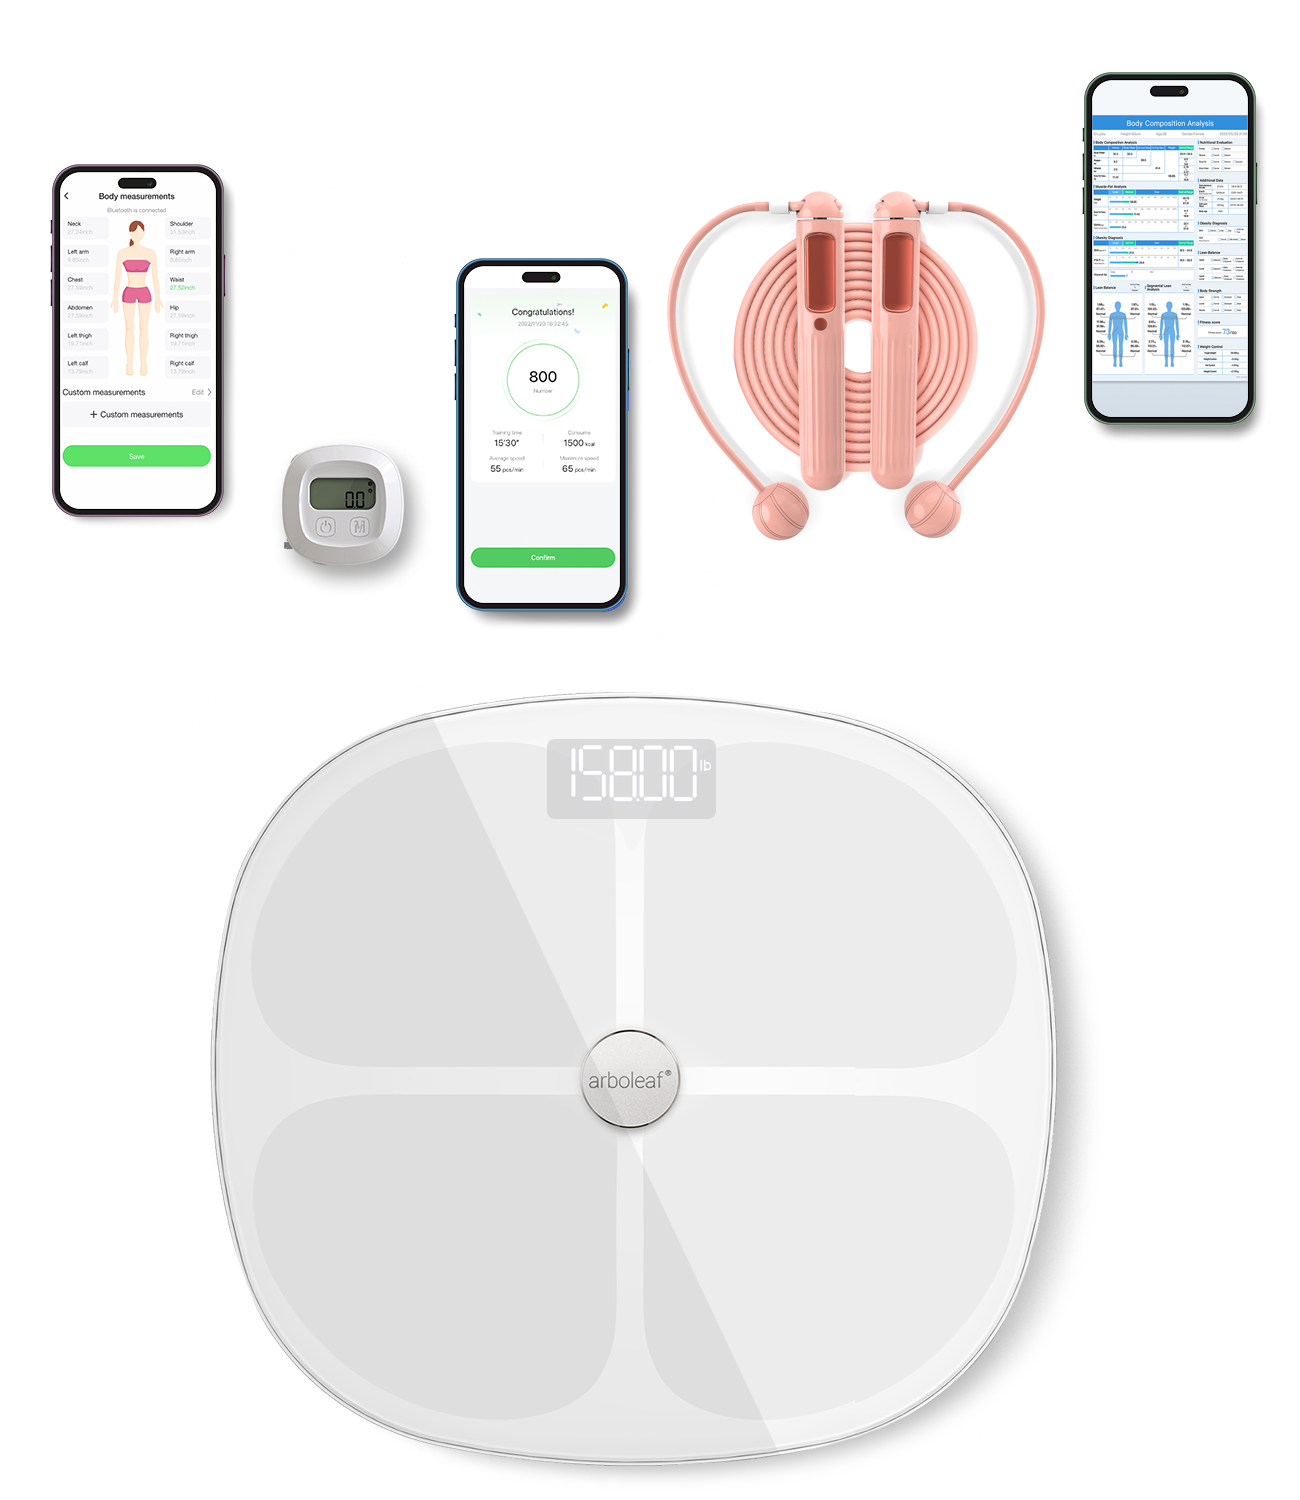 Arboleaf White Body Composition Smart Scale CS20M - Mobile App - NEW